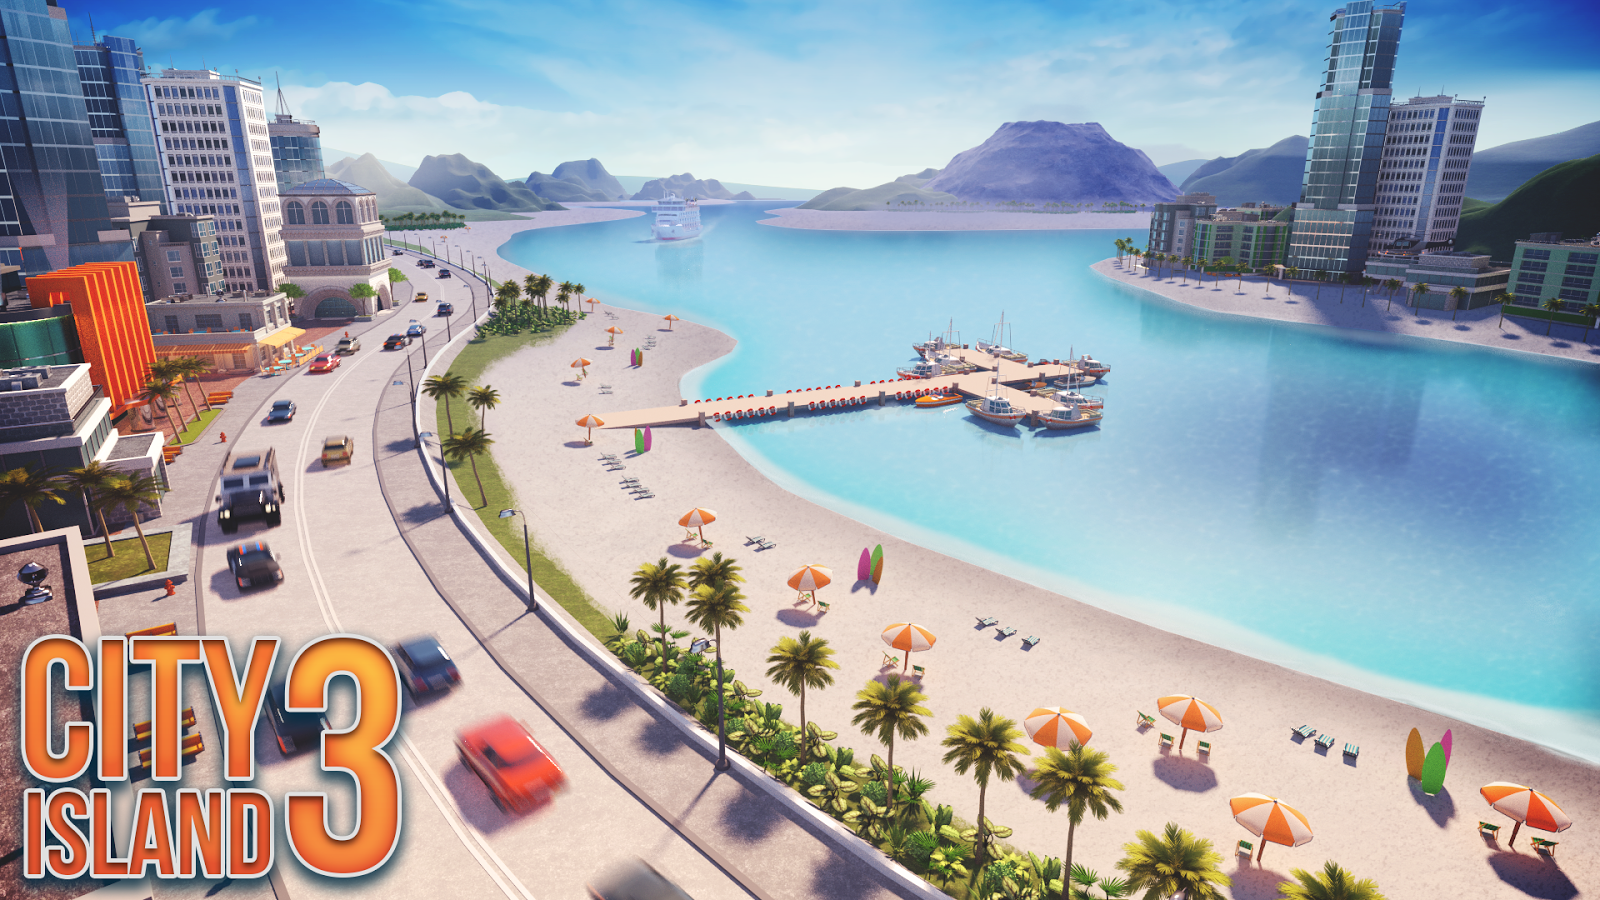 City Island 3 - Building Sim v1.8.10 APK (MOD, dinero ilimitado) Android Gratis